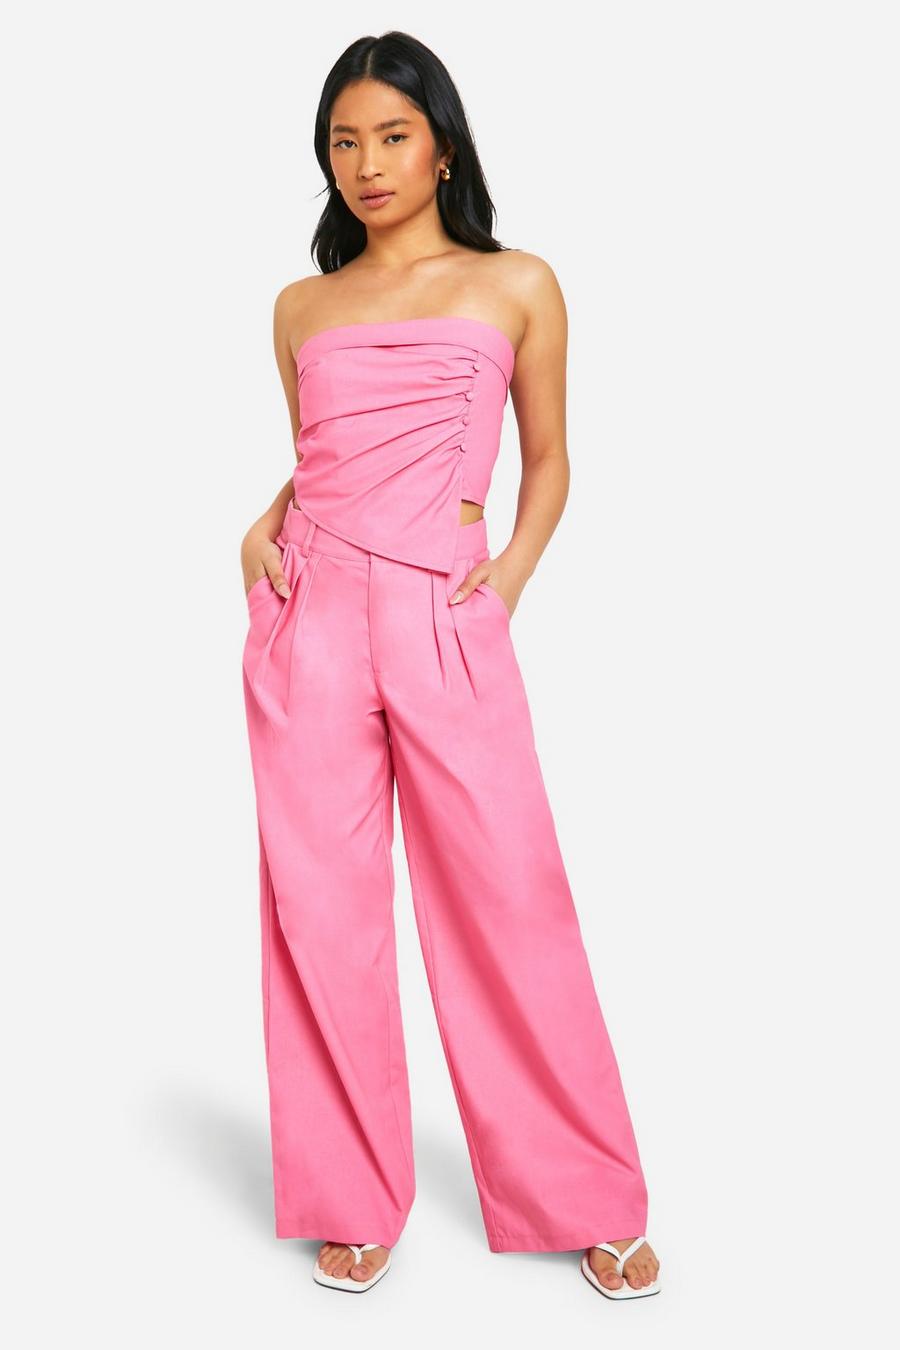 Pantalón Petite entallado efecto lino con pernera ancha, Hot pink